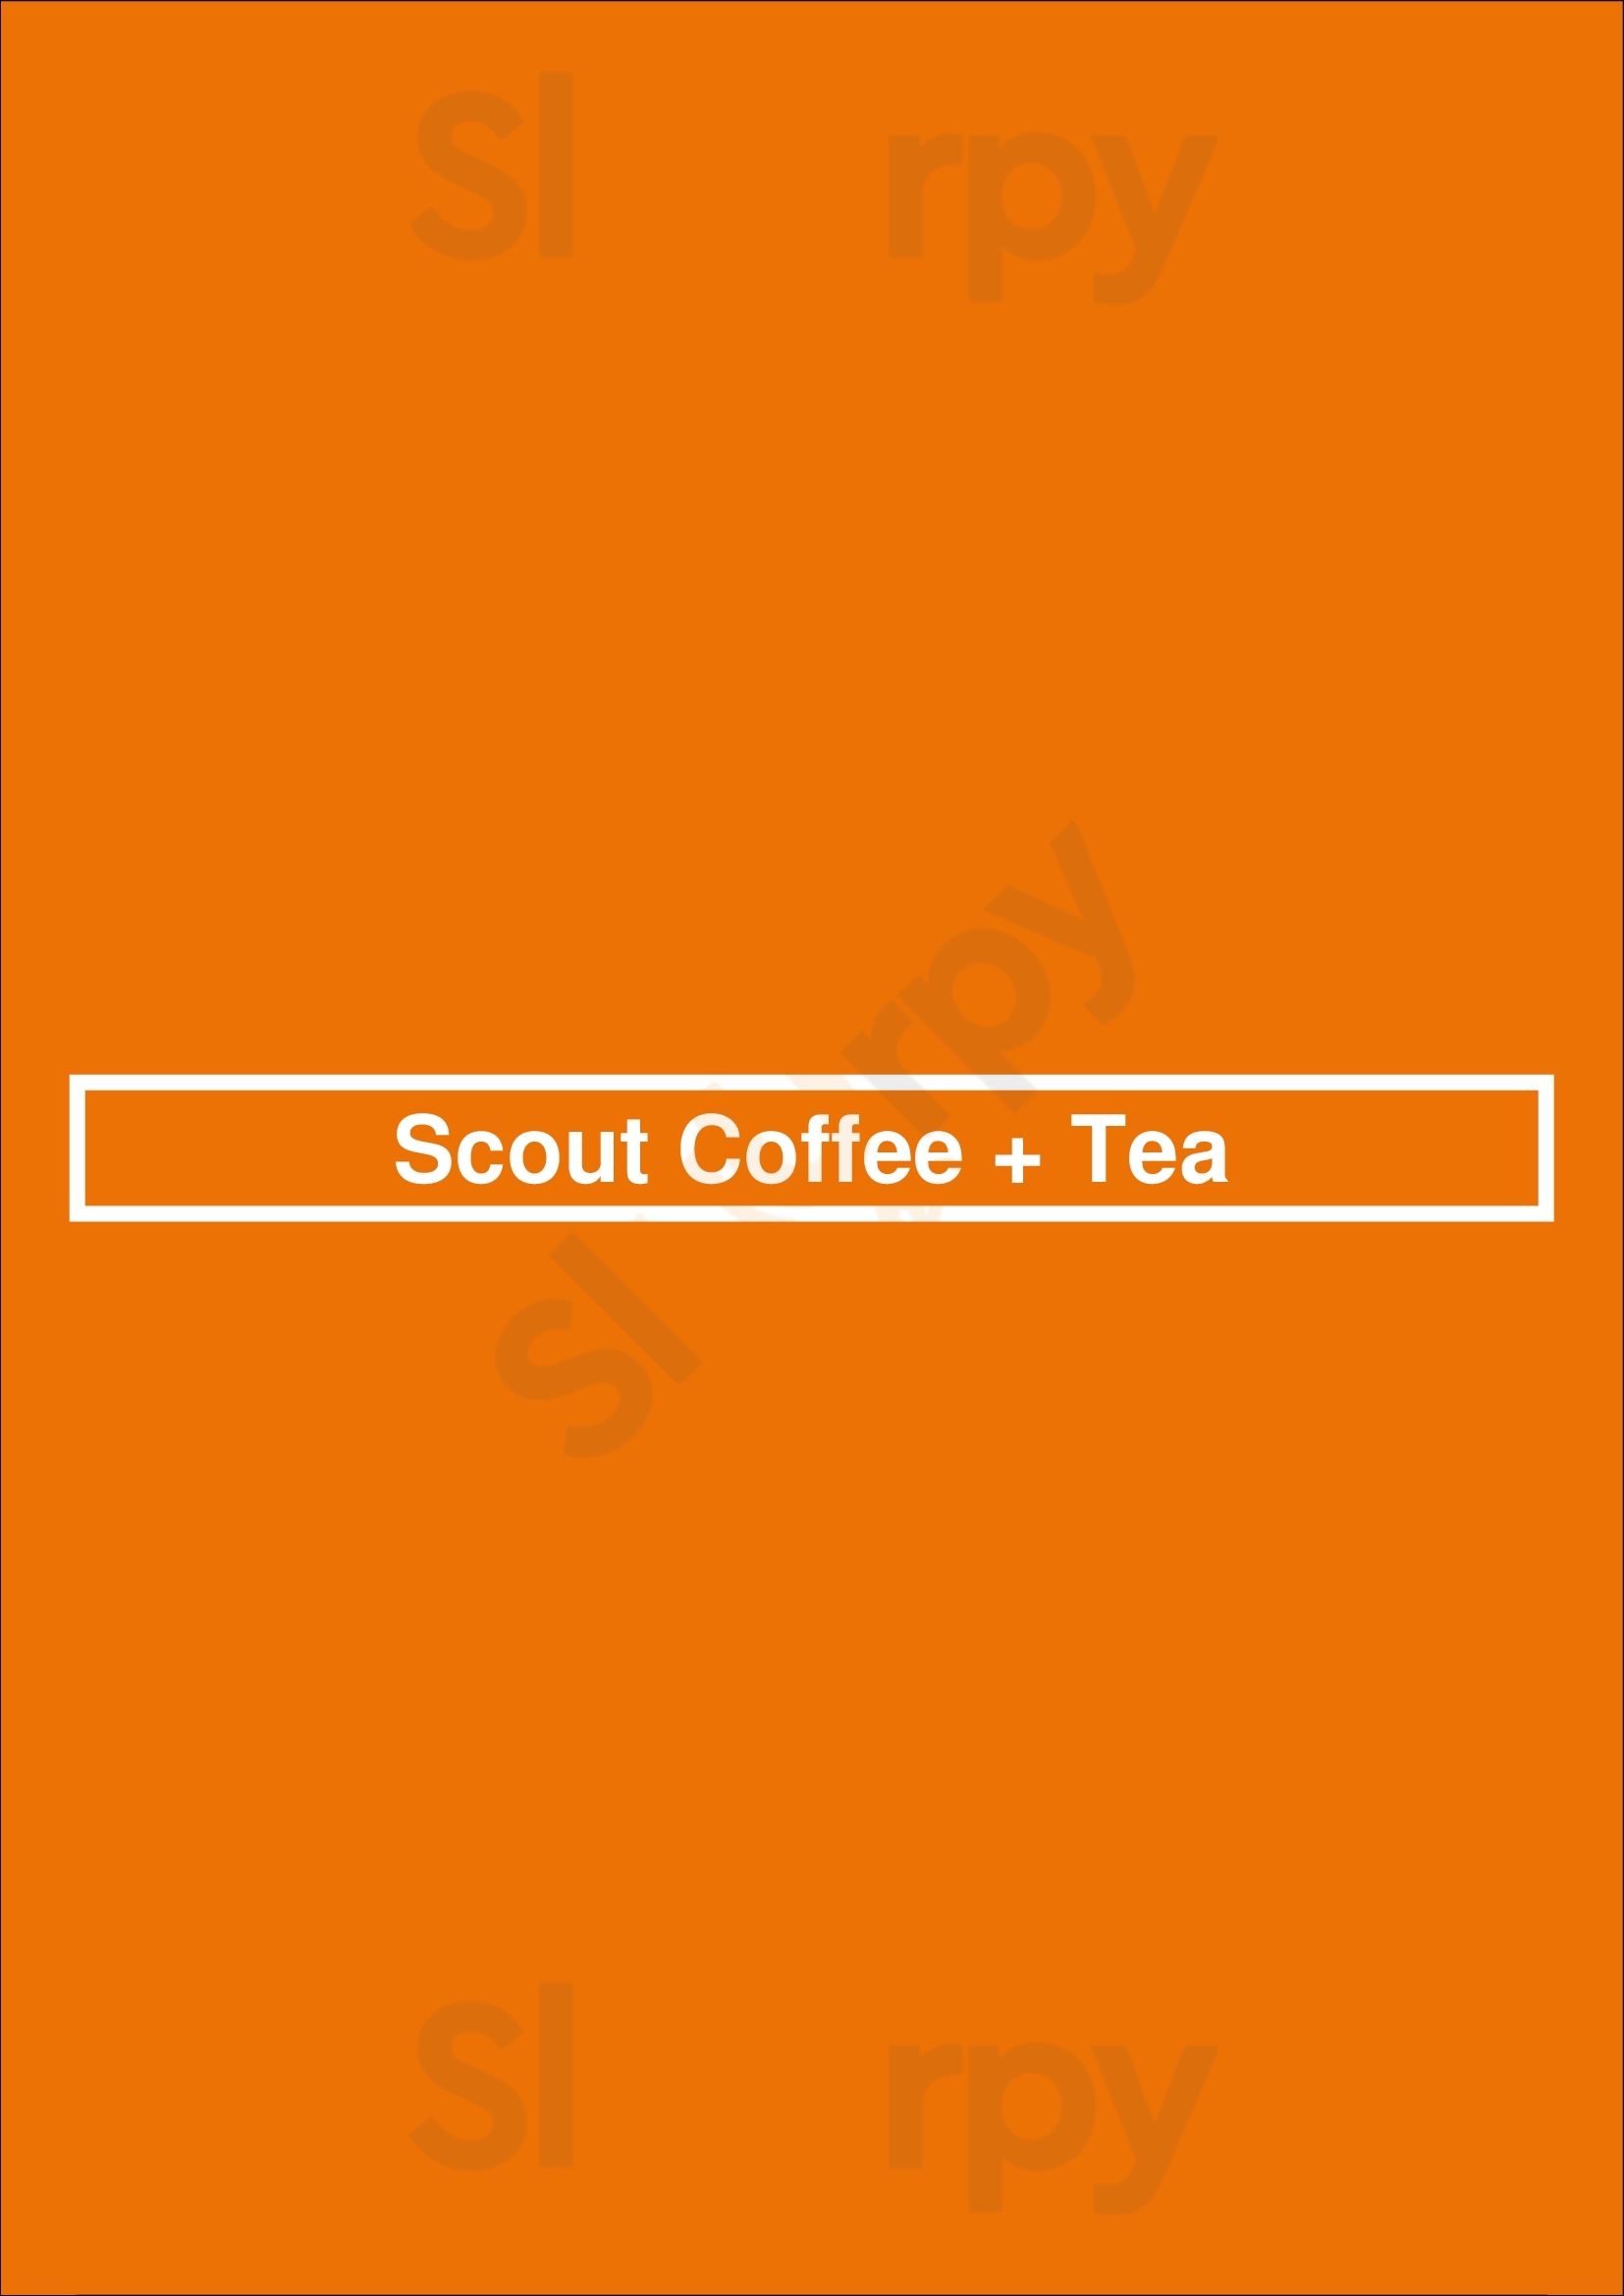 Scout Coffee + Tea Winnipeg Menu - 1